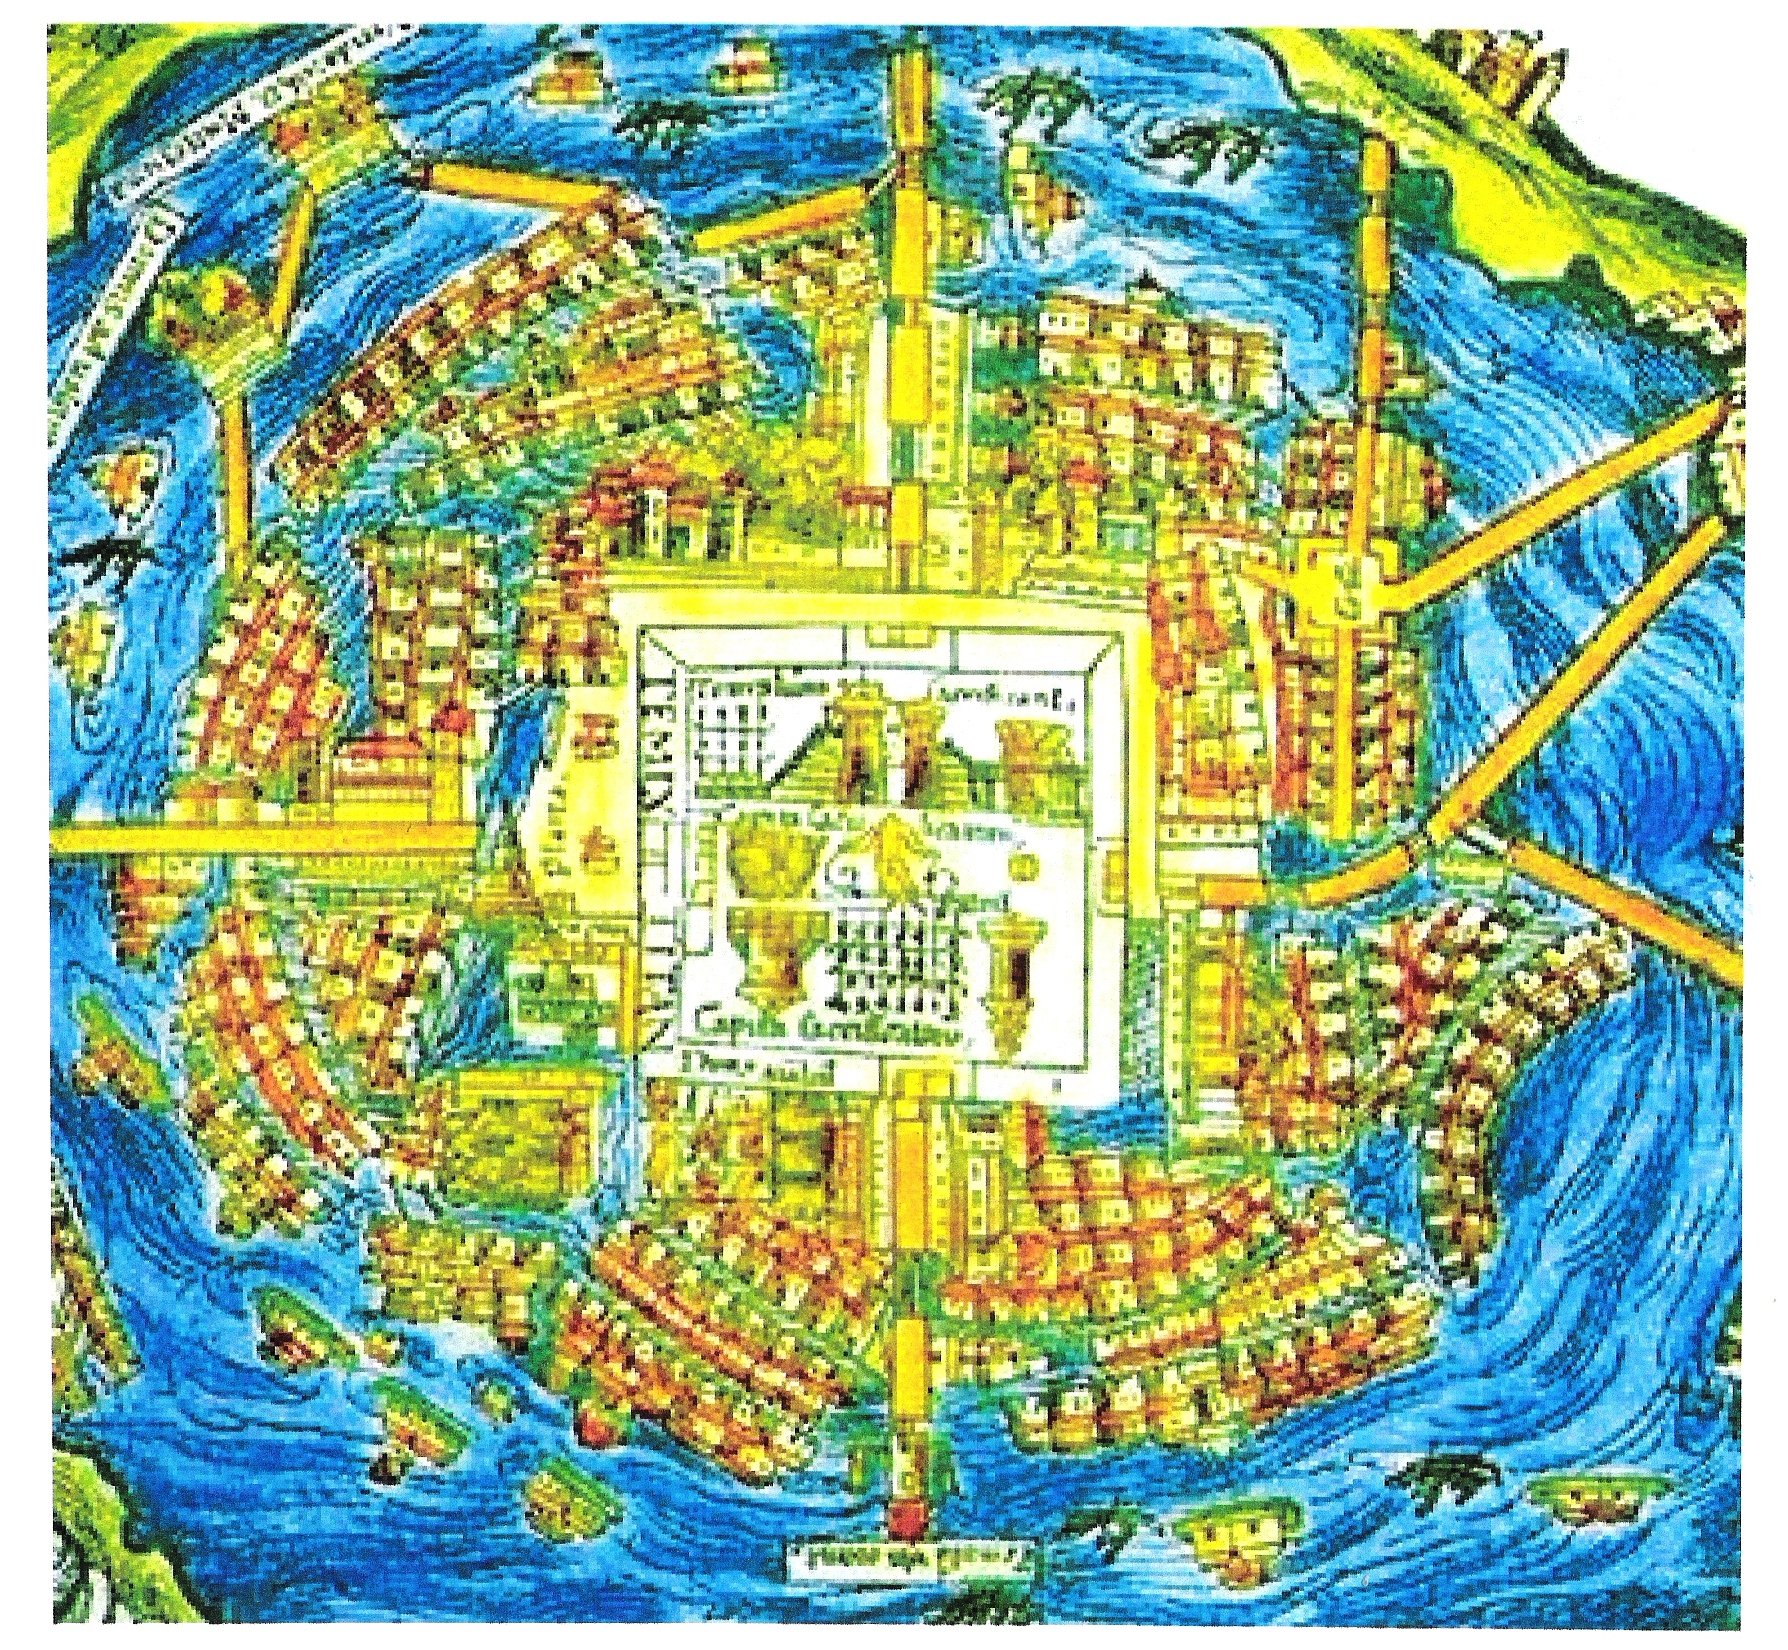 Mexico City in 1519CE